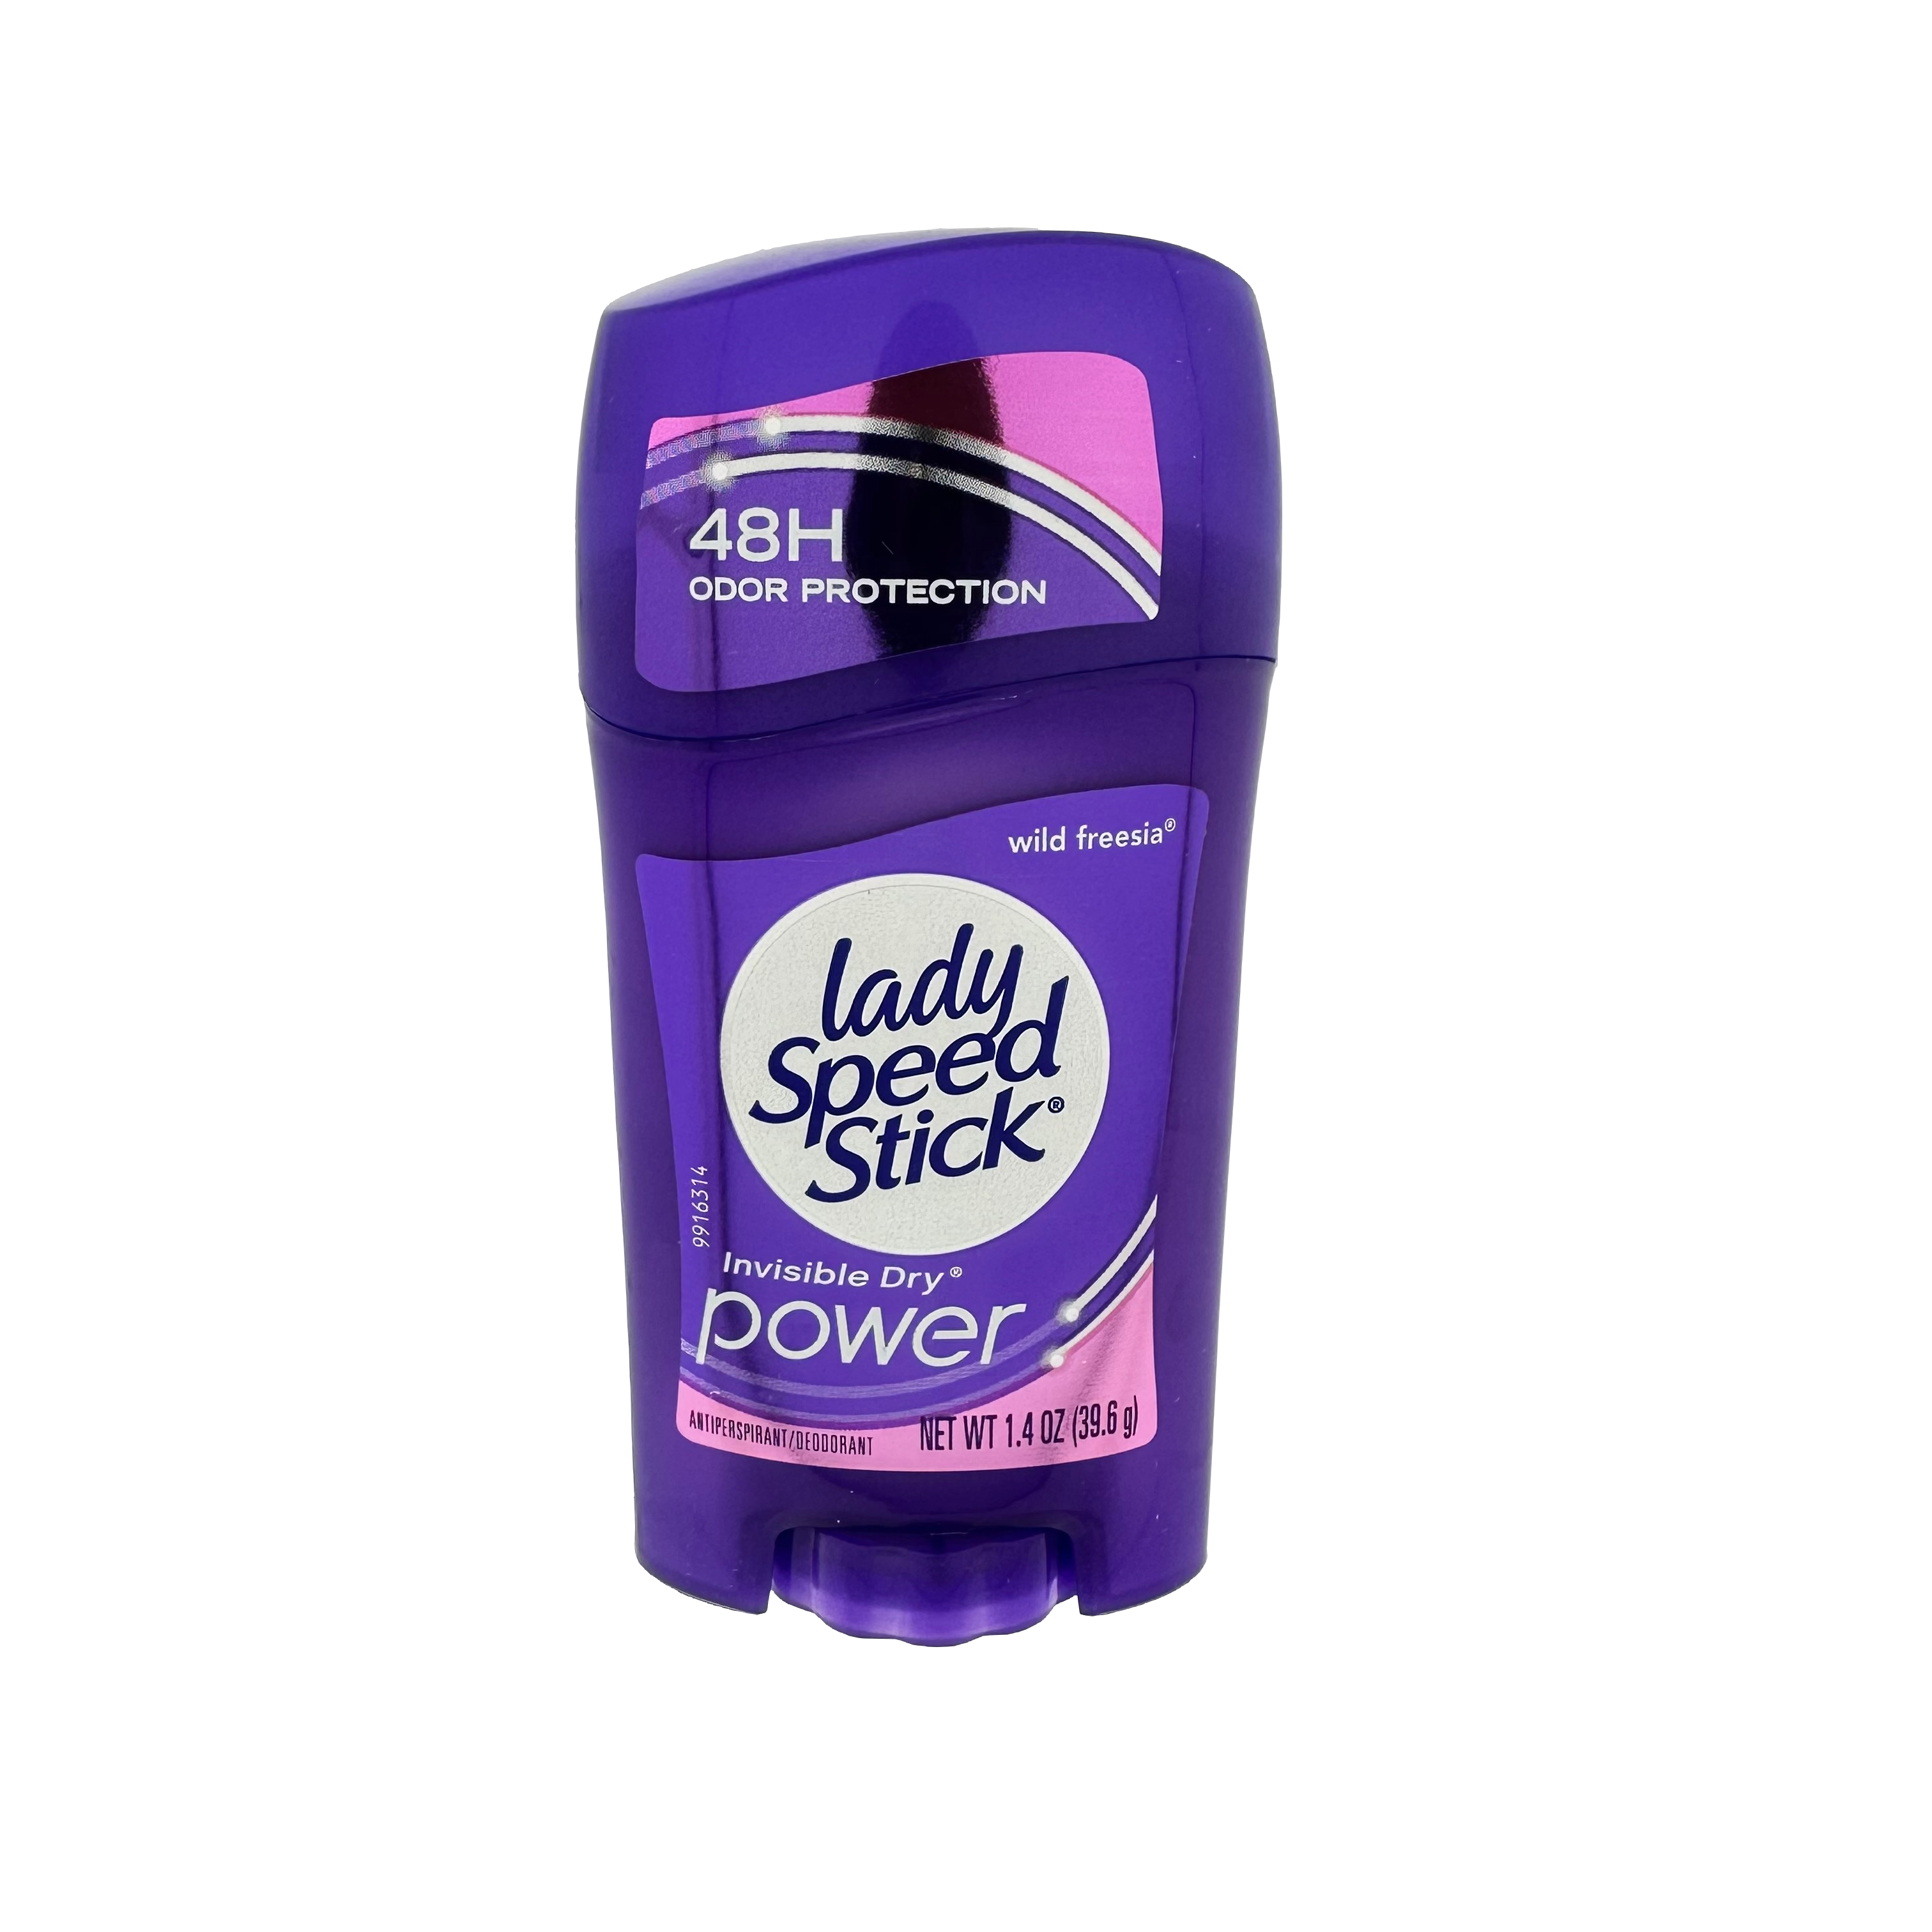 Lady Speed Stick Invisible Dry power Wild Freesia deodorant stick 39.6g